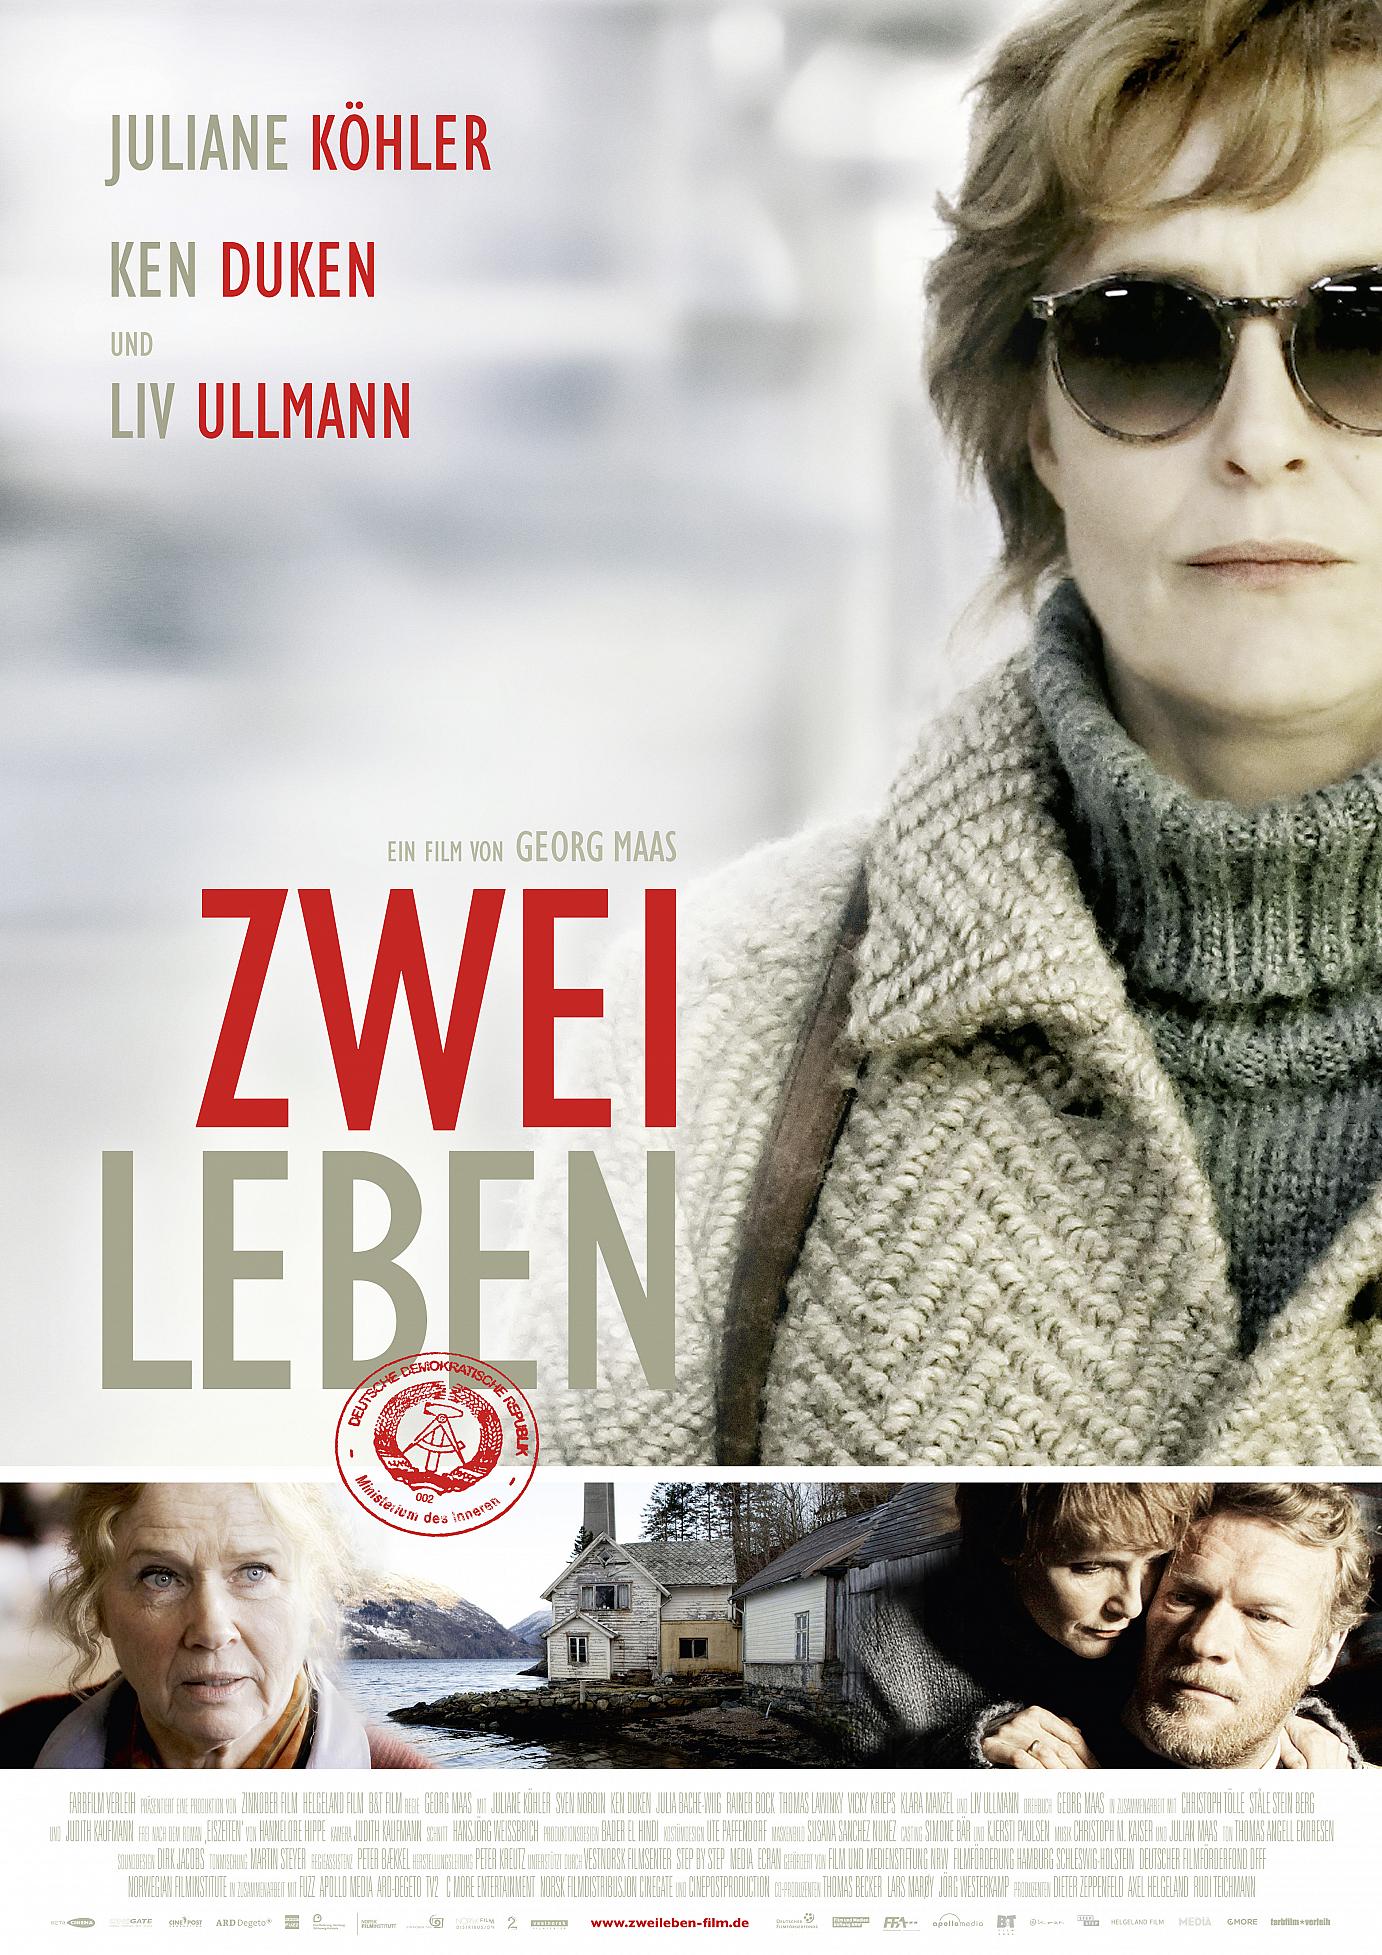 Two Lives / Zwei Leben (2012)